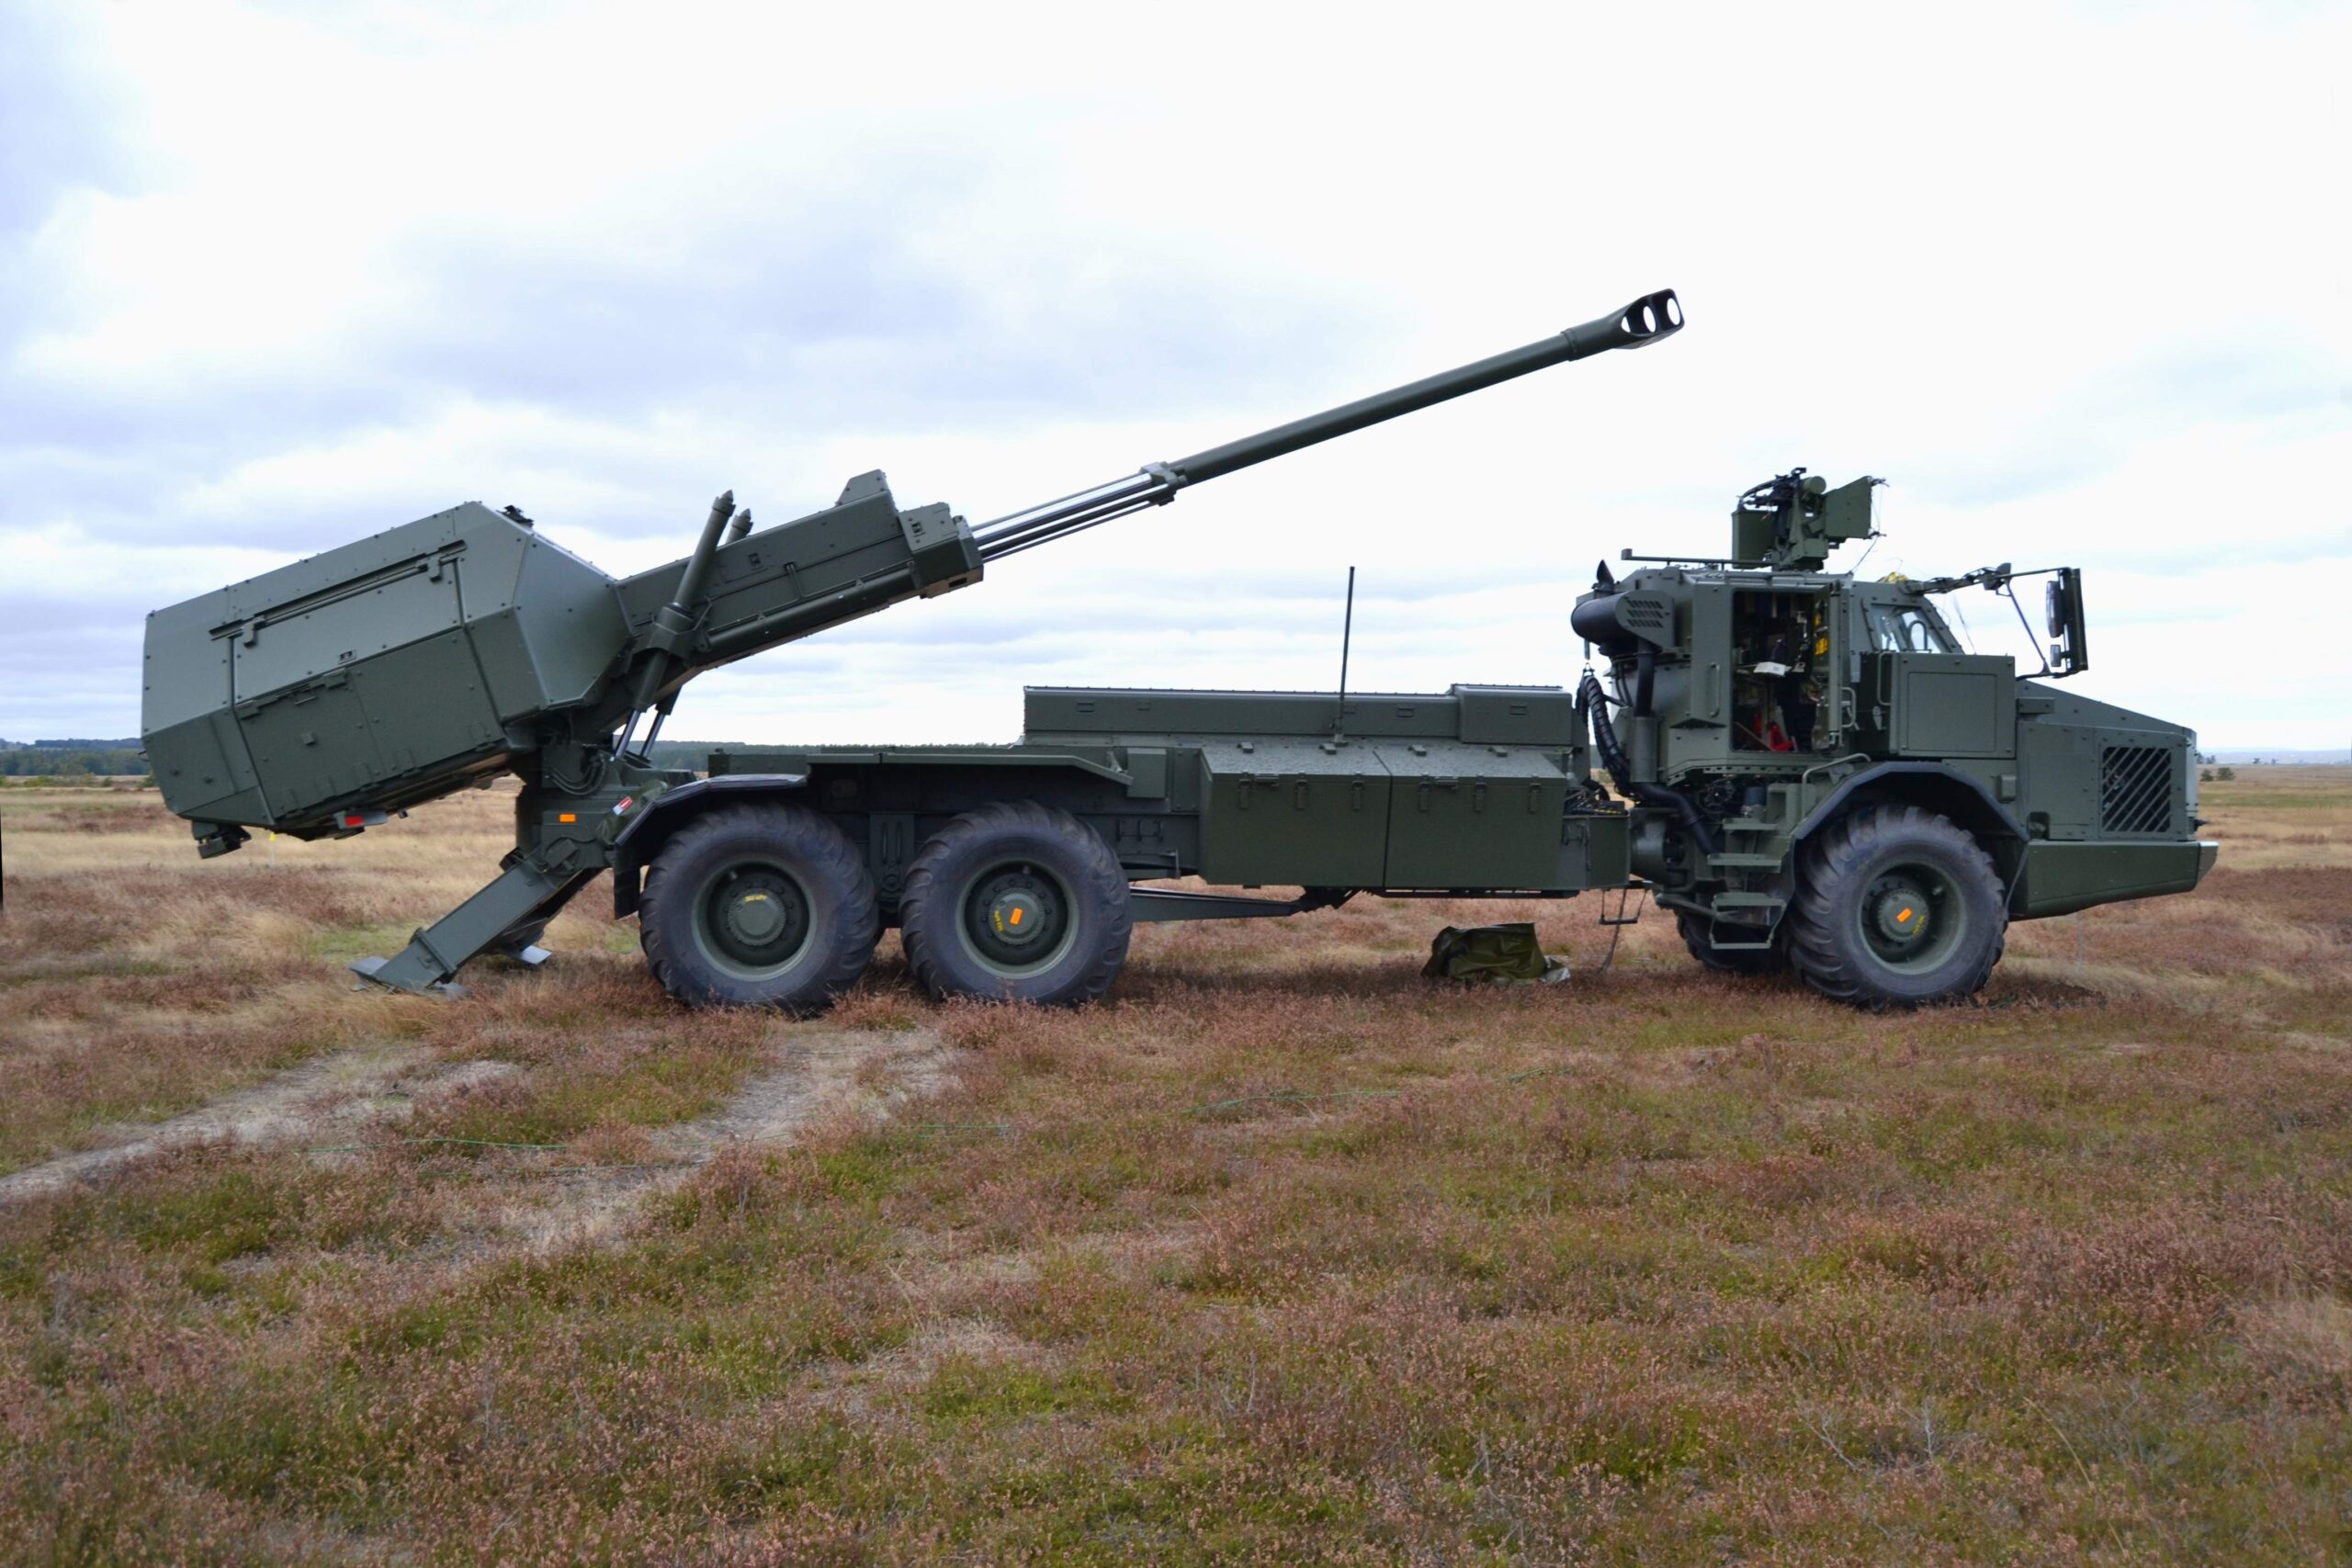 BOFORS ARCHER: The pride of the Swedish Artillery - GEOPOLITIKI